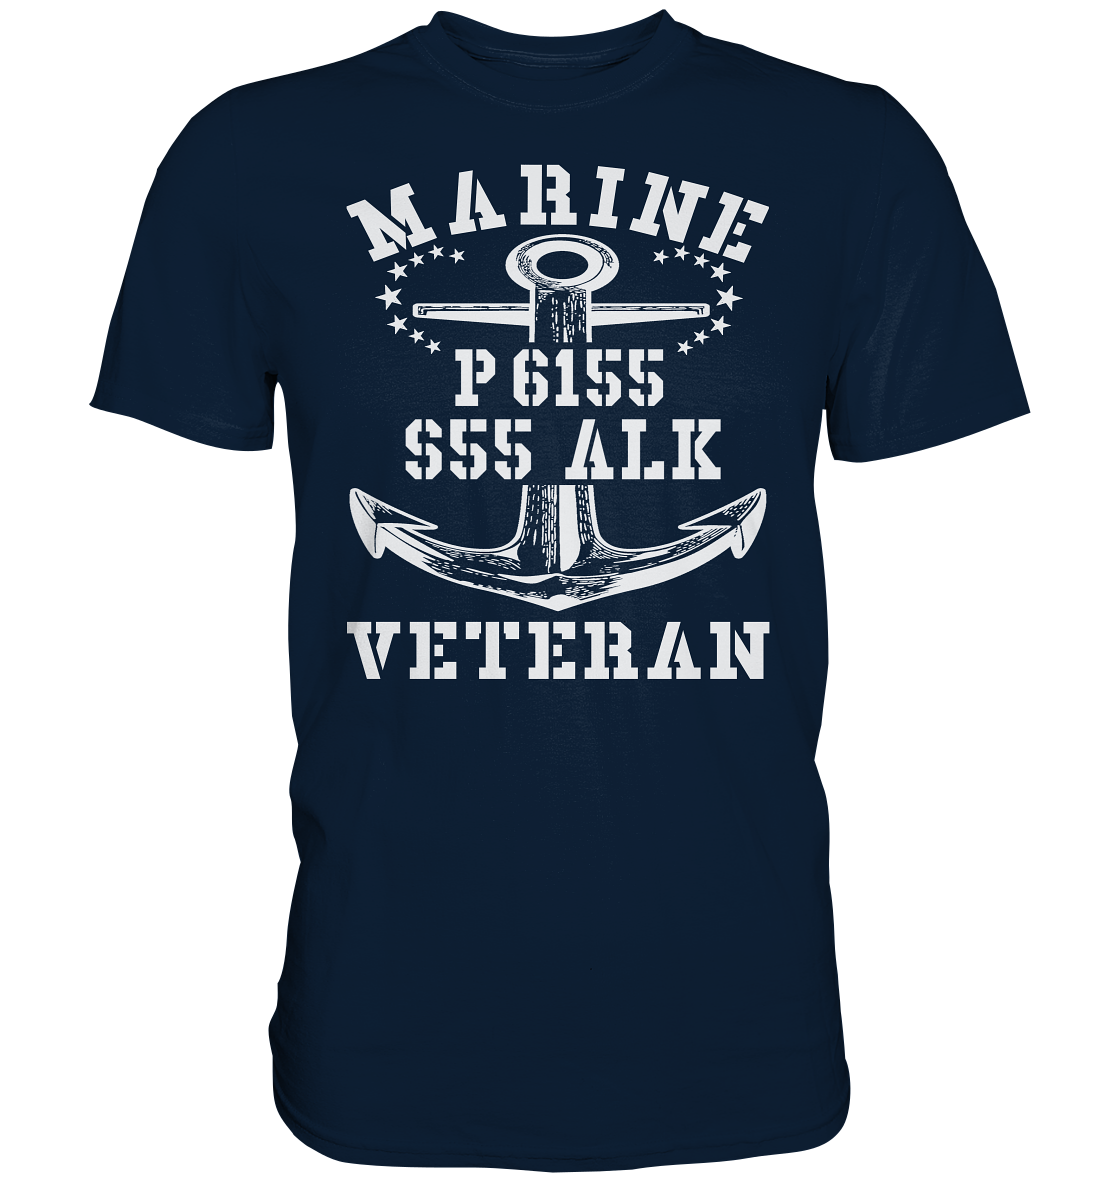 P6155 S55 ALK Marine Veteran - Premium Shirt